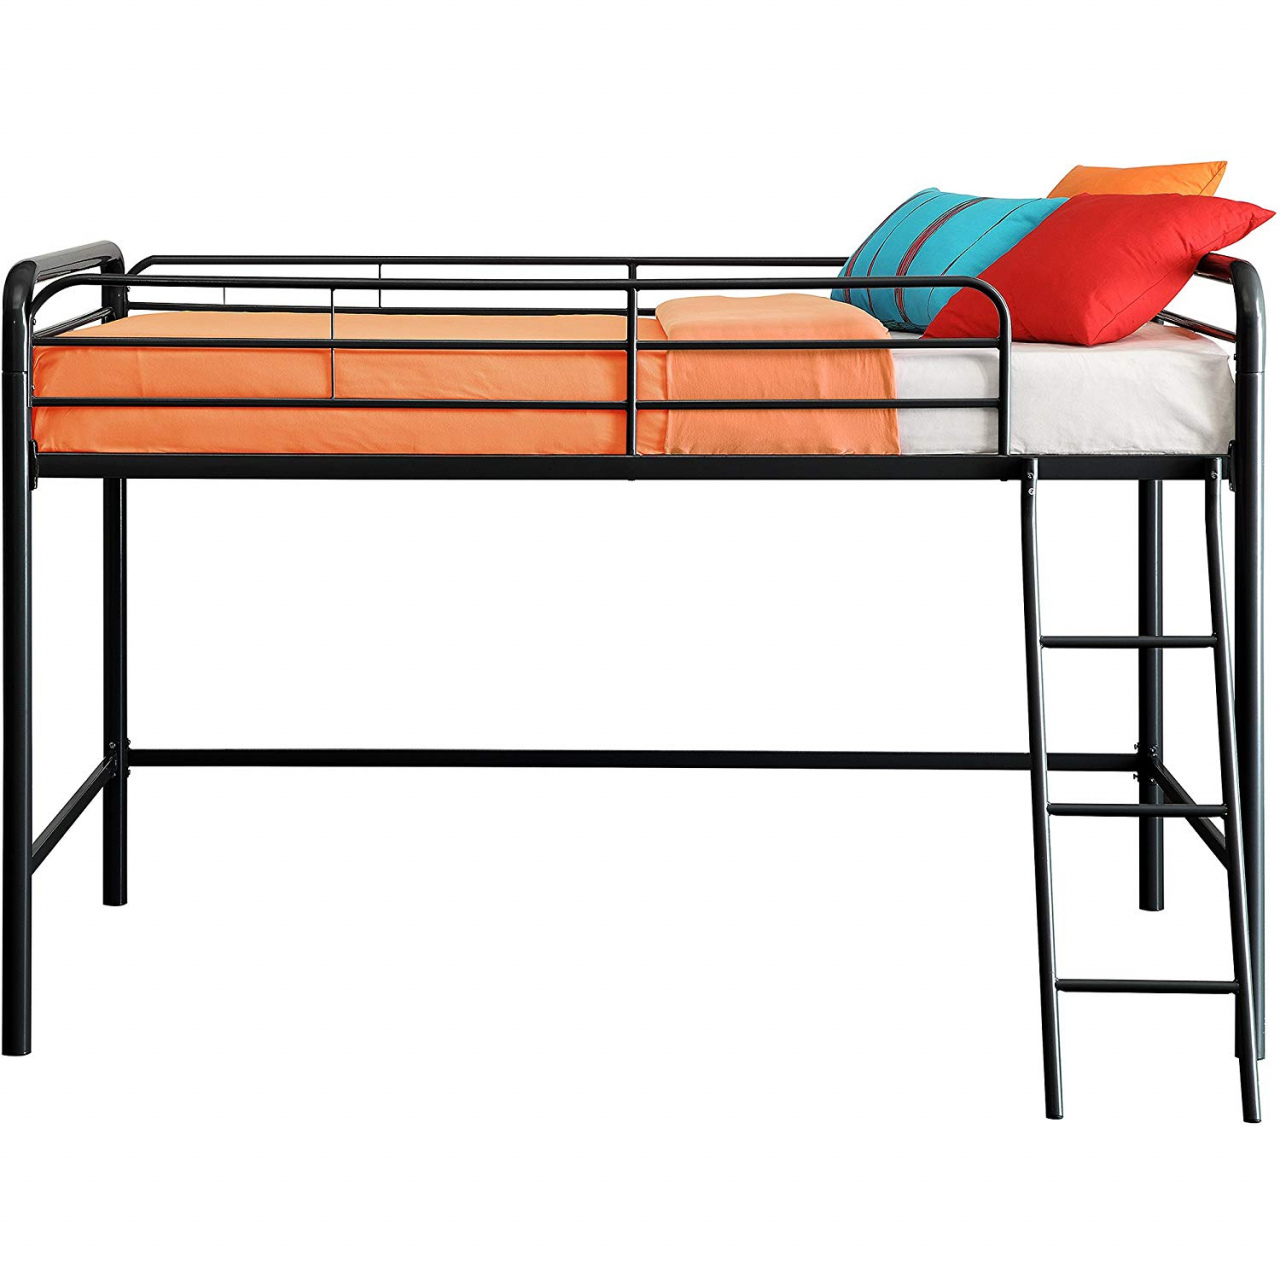 metal loft bed with slide home junior metal twin loft bed furniture frame bunk durch metal loft bed with slide